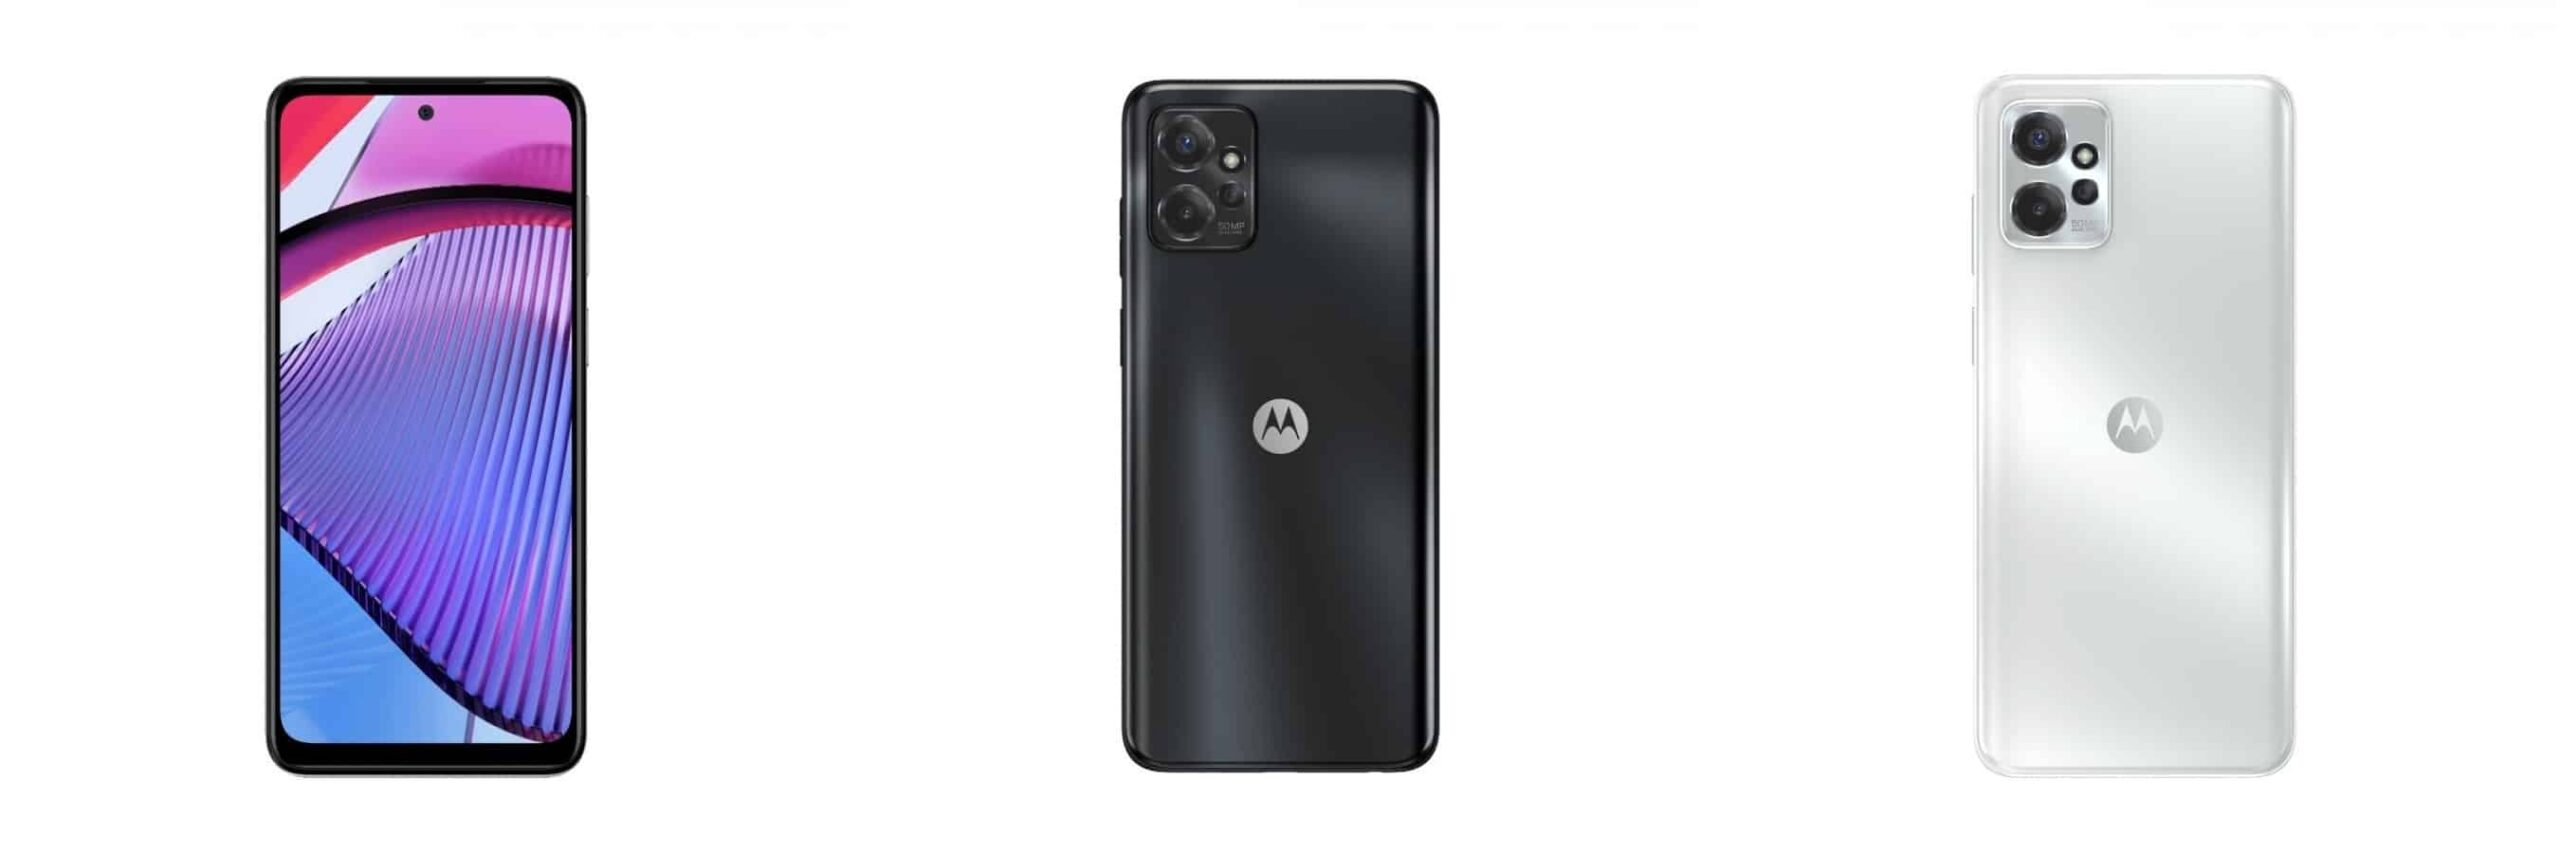 Motorola Moto G Power 5G resmiyet kazandı